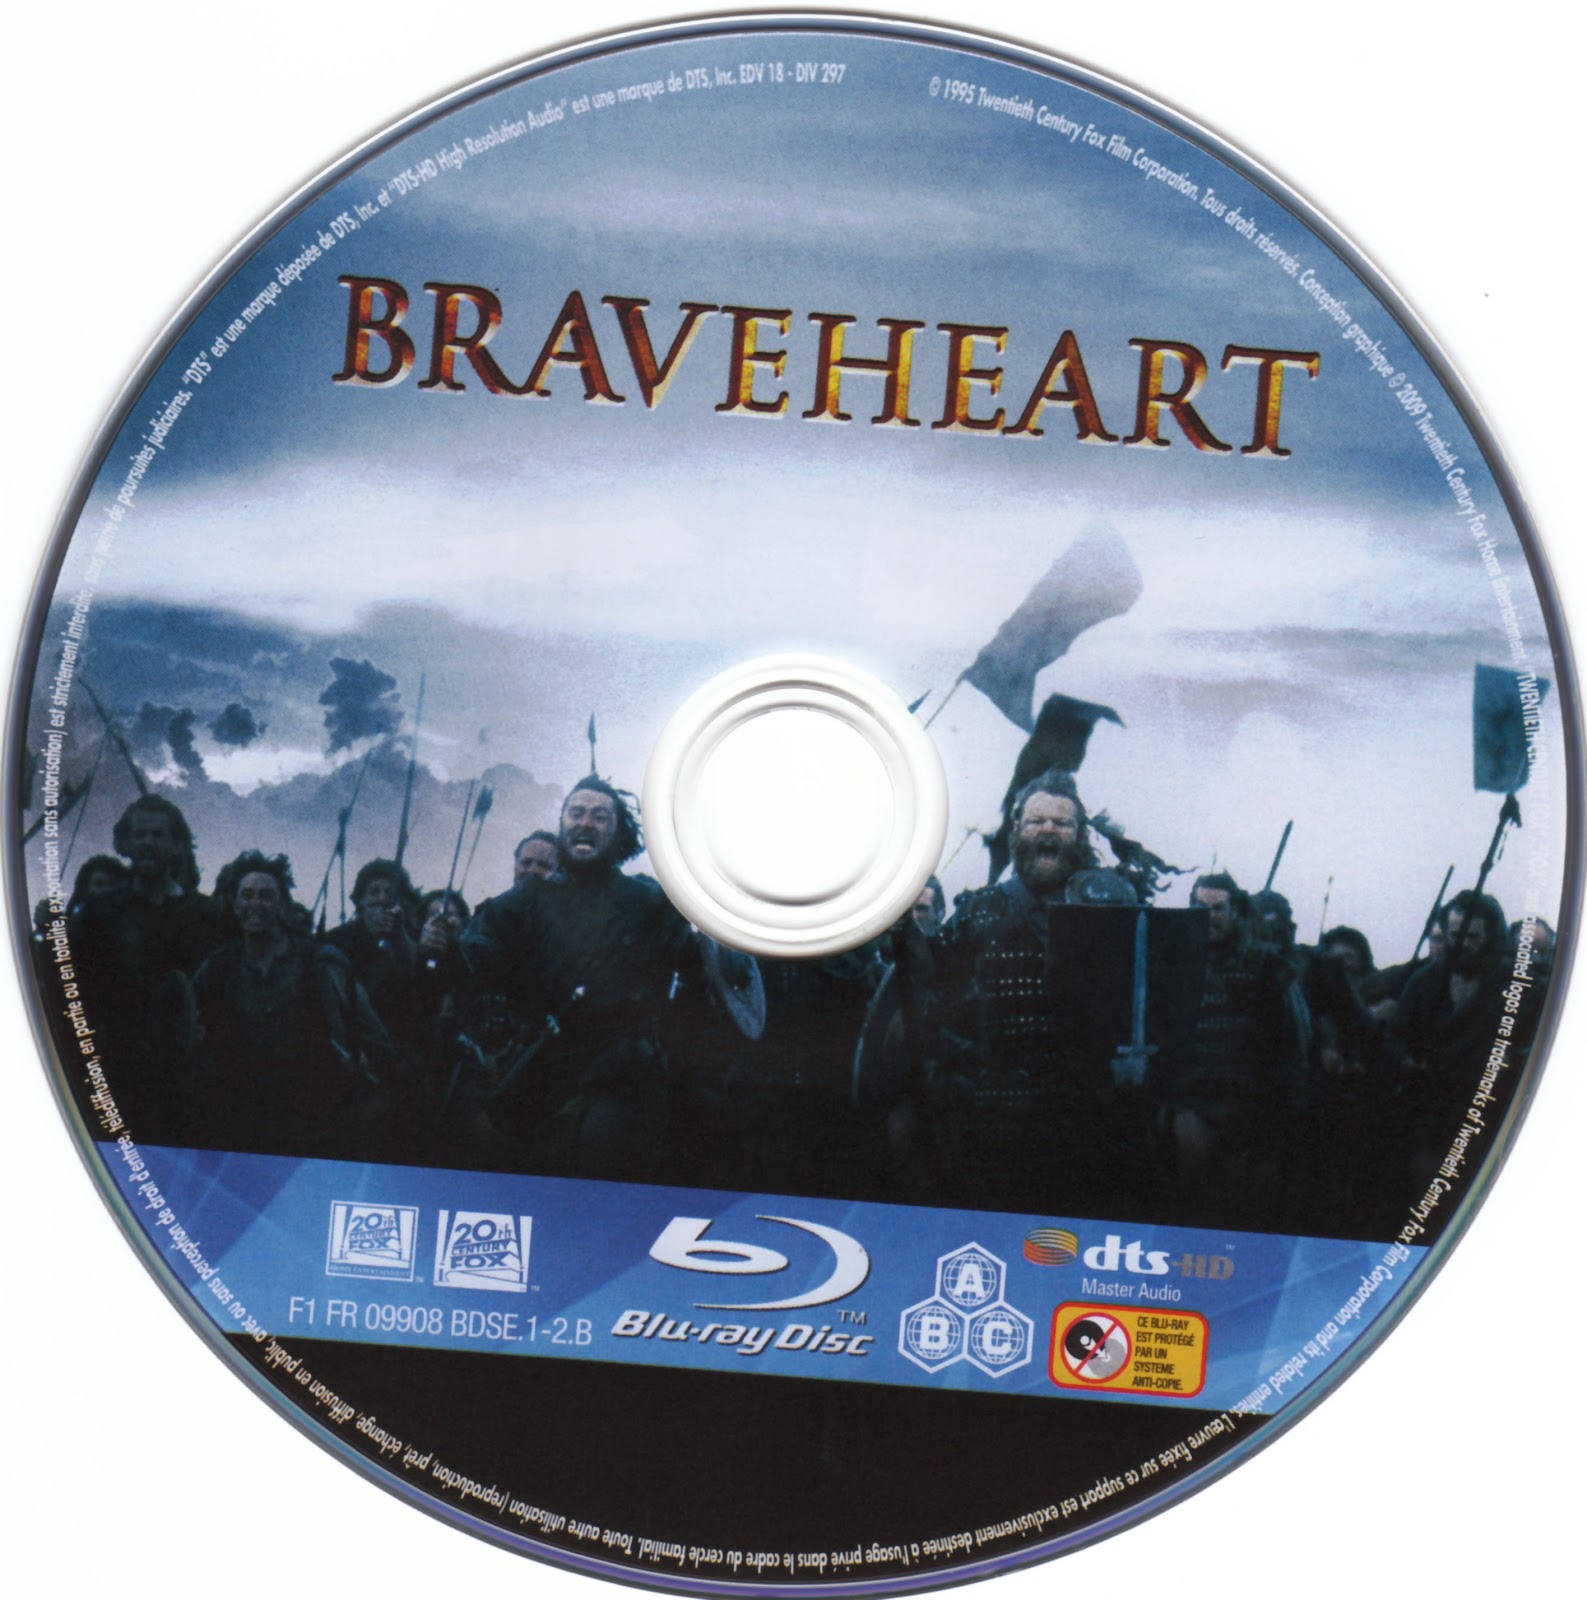 Braveheart Dvd Label